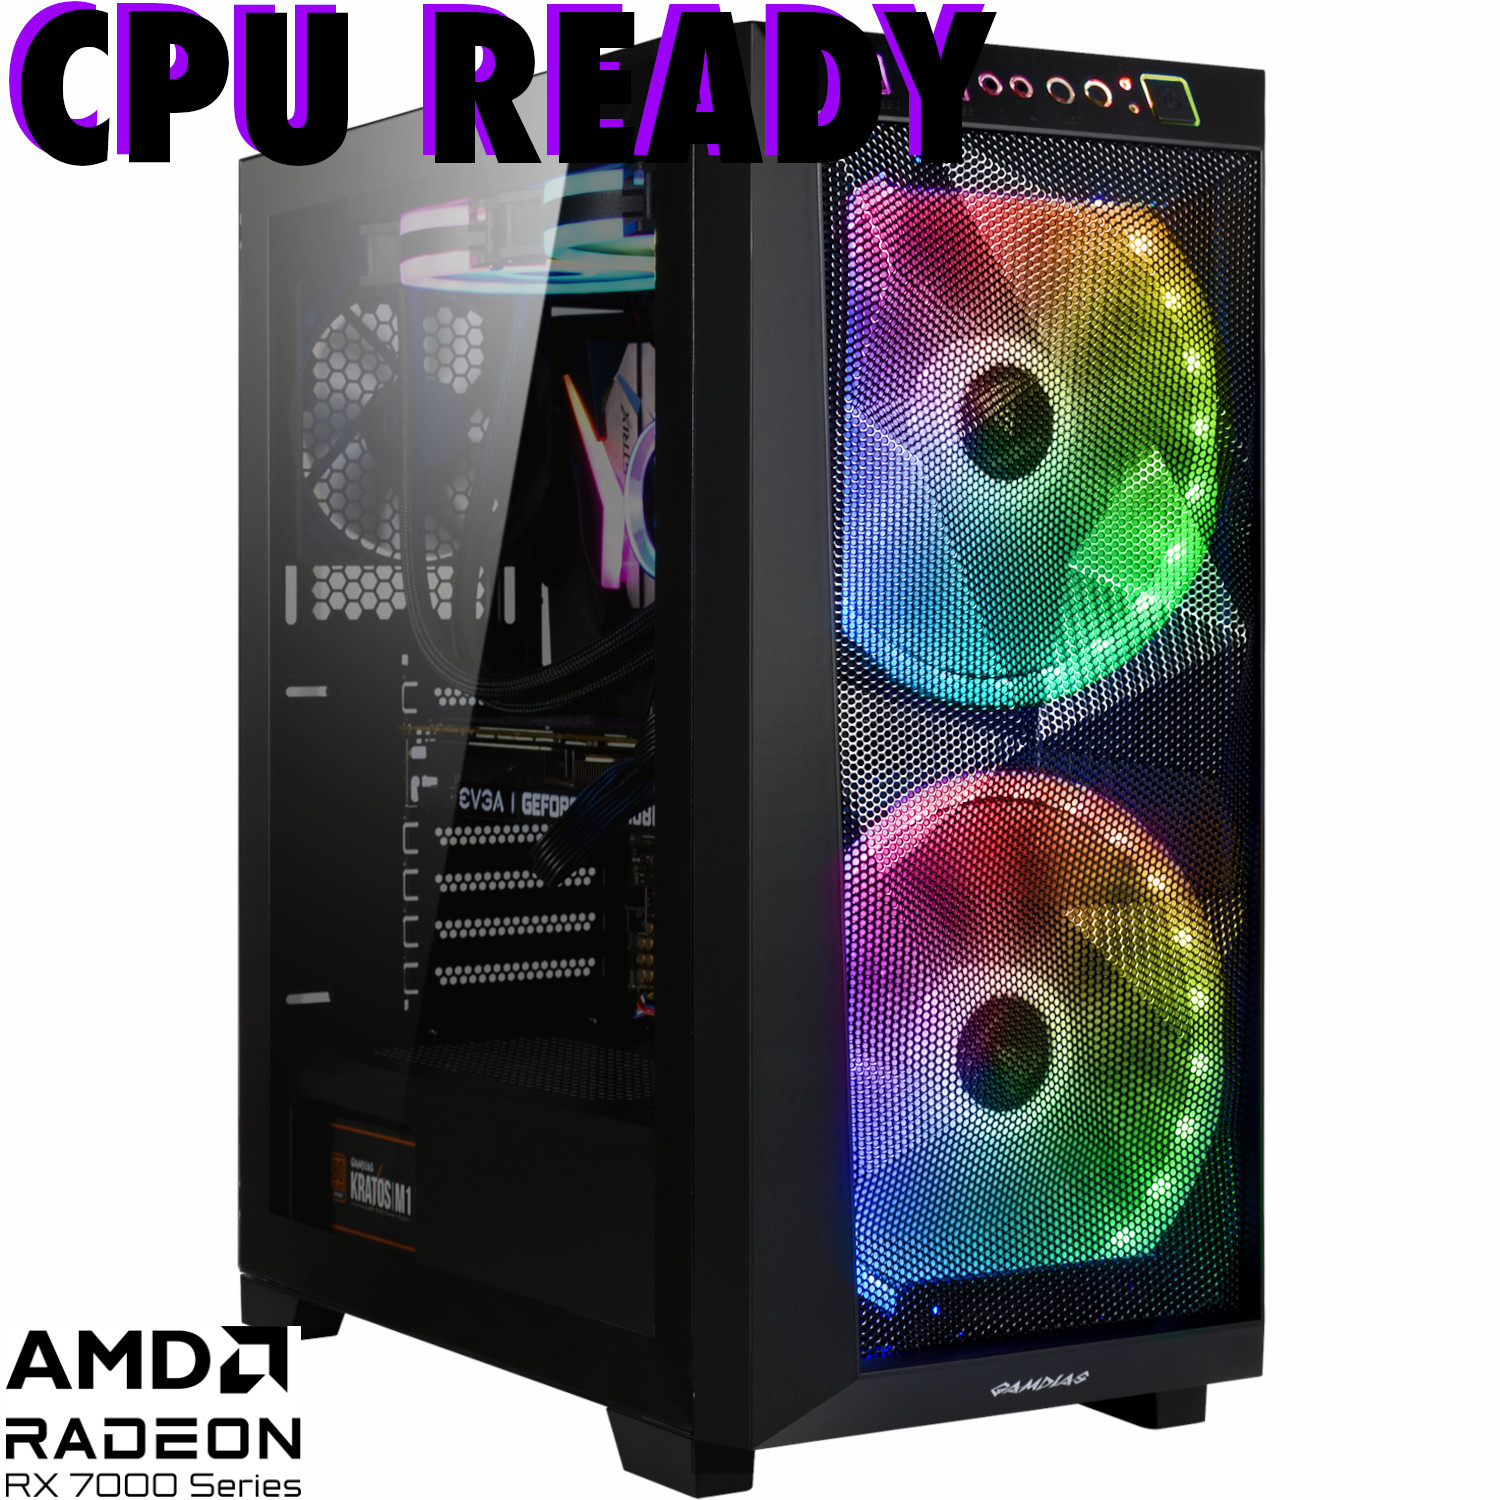 Plonter - Gamer-7800XT-Intel-Ready -   